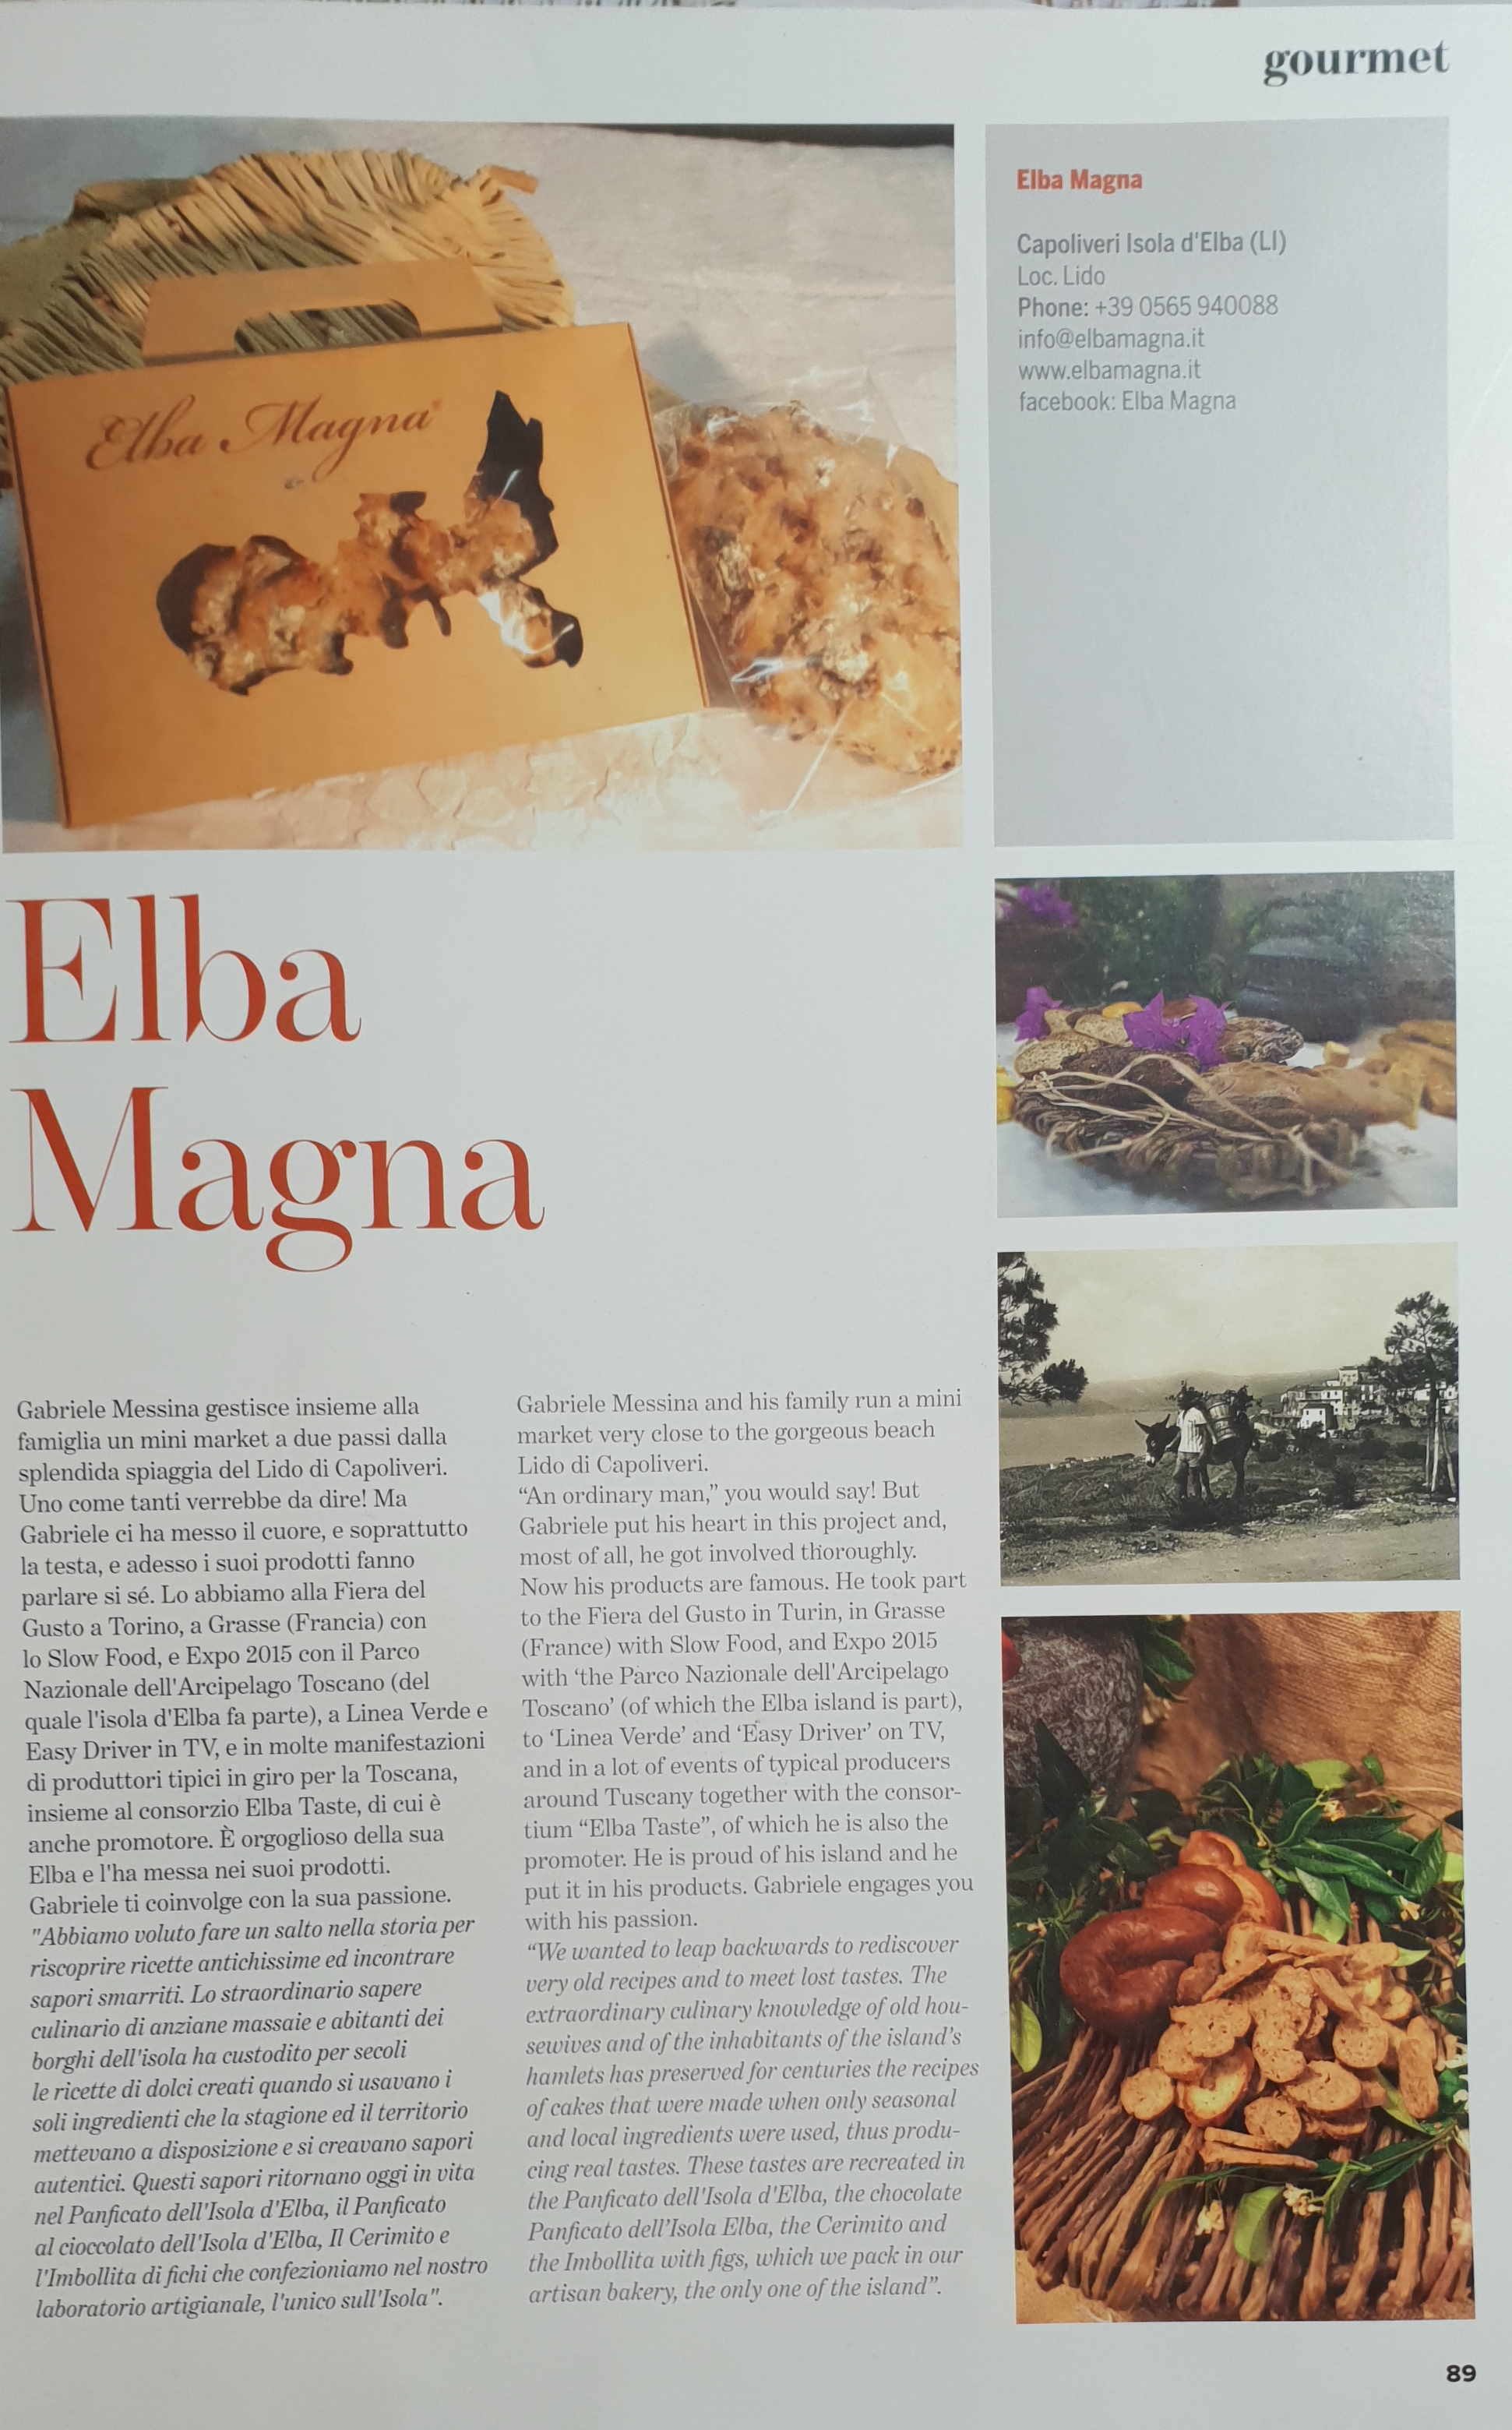 Gourmet Elba Magna